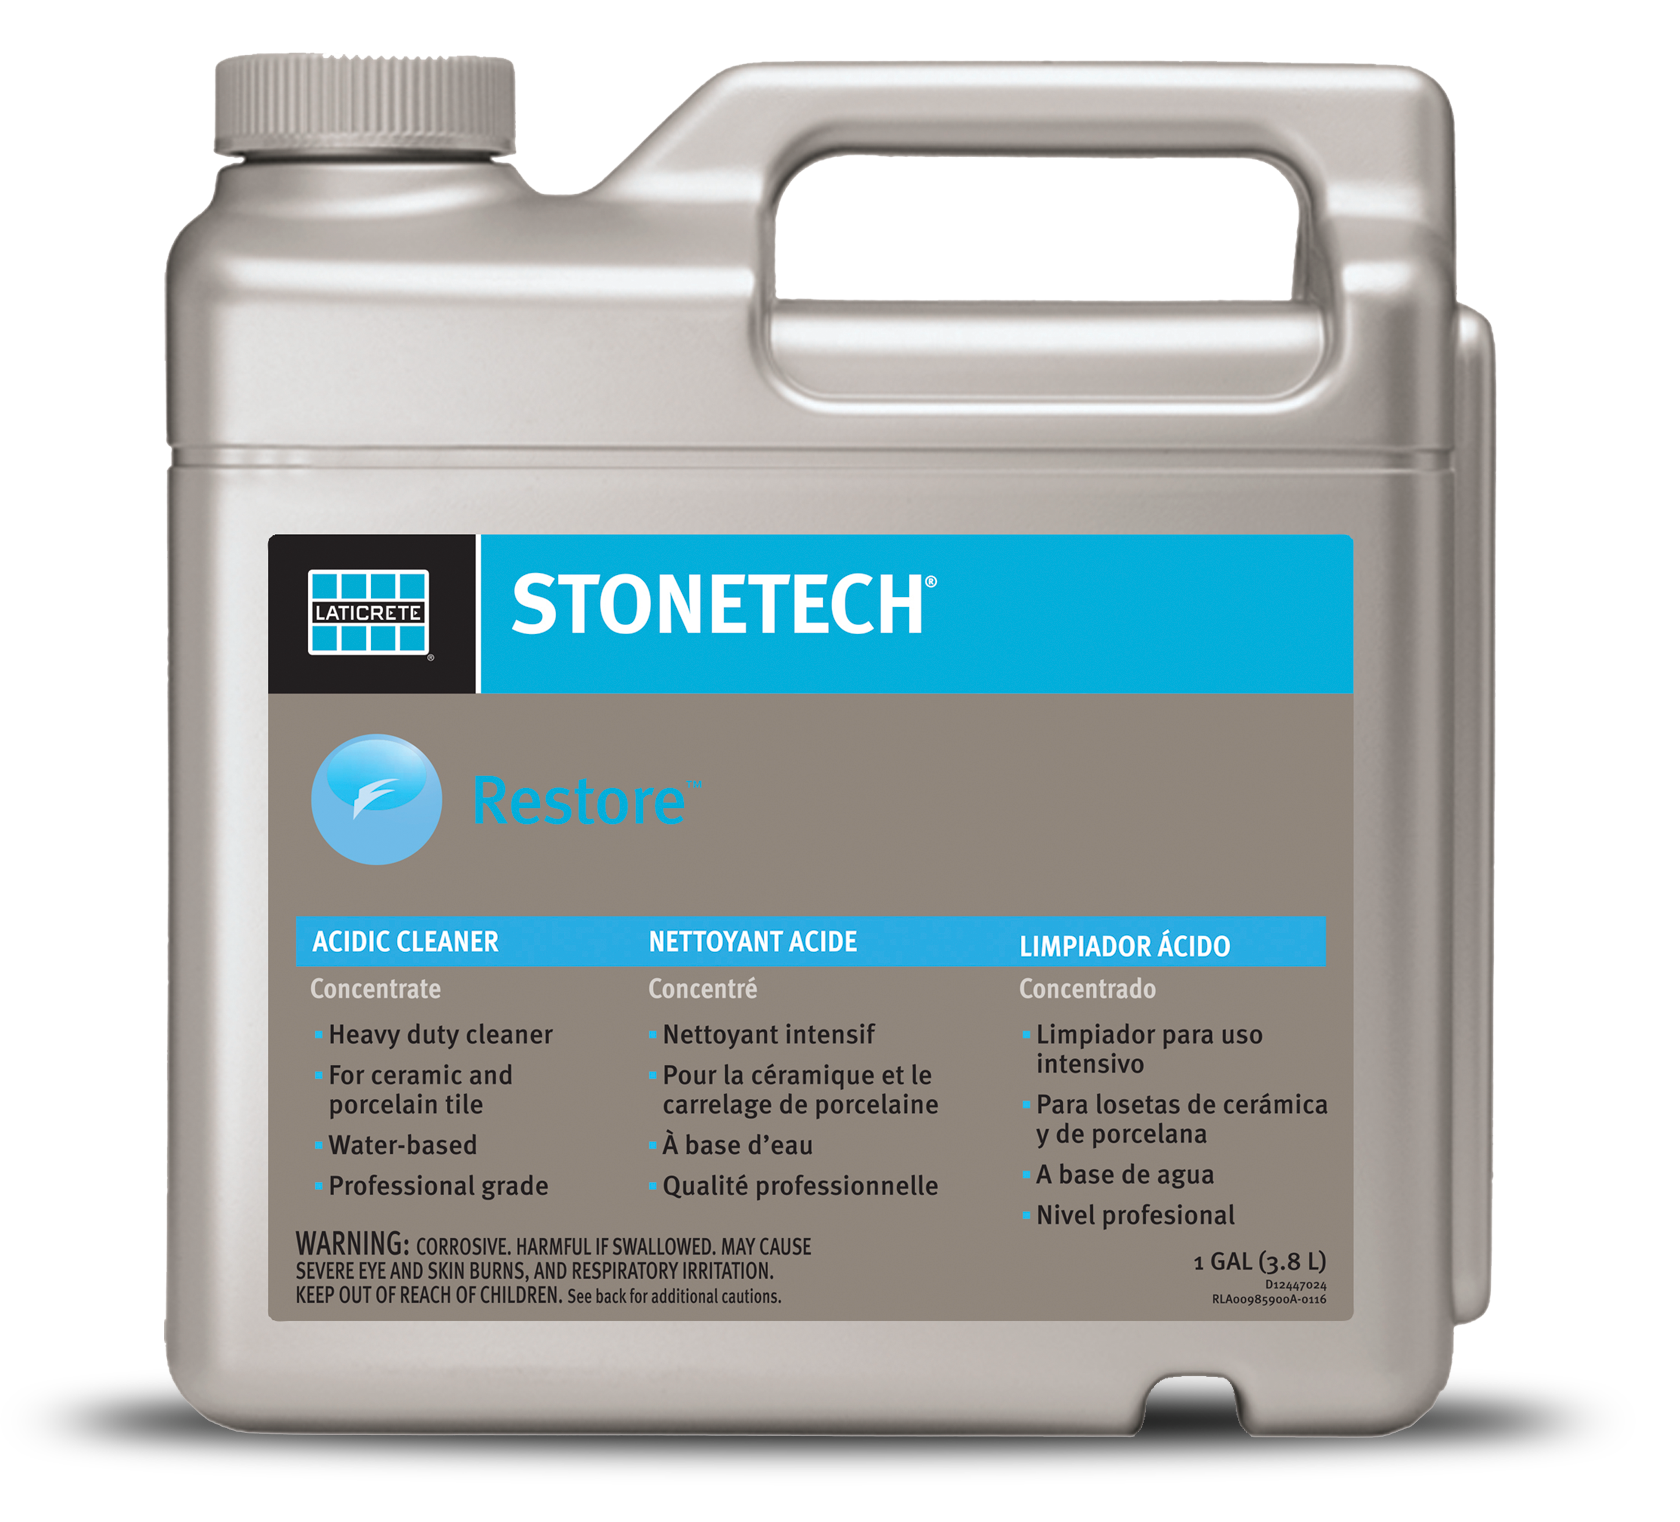 STONETECH® Restore Acidic Cleaner